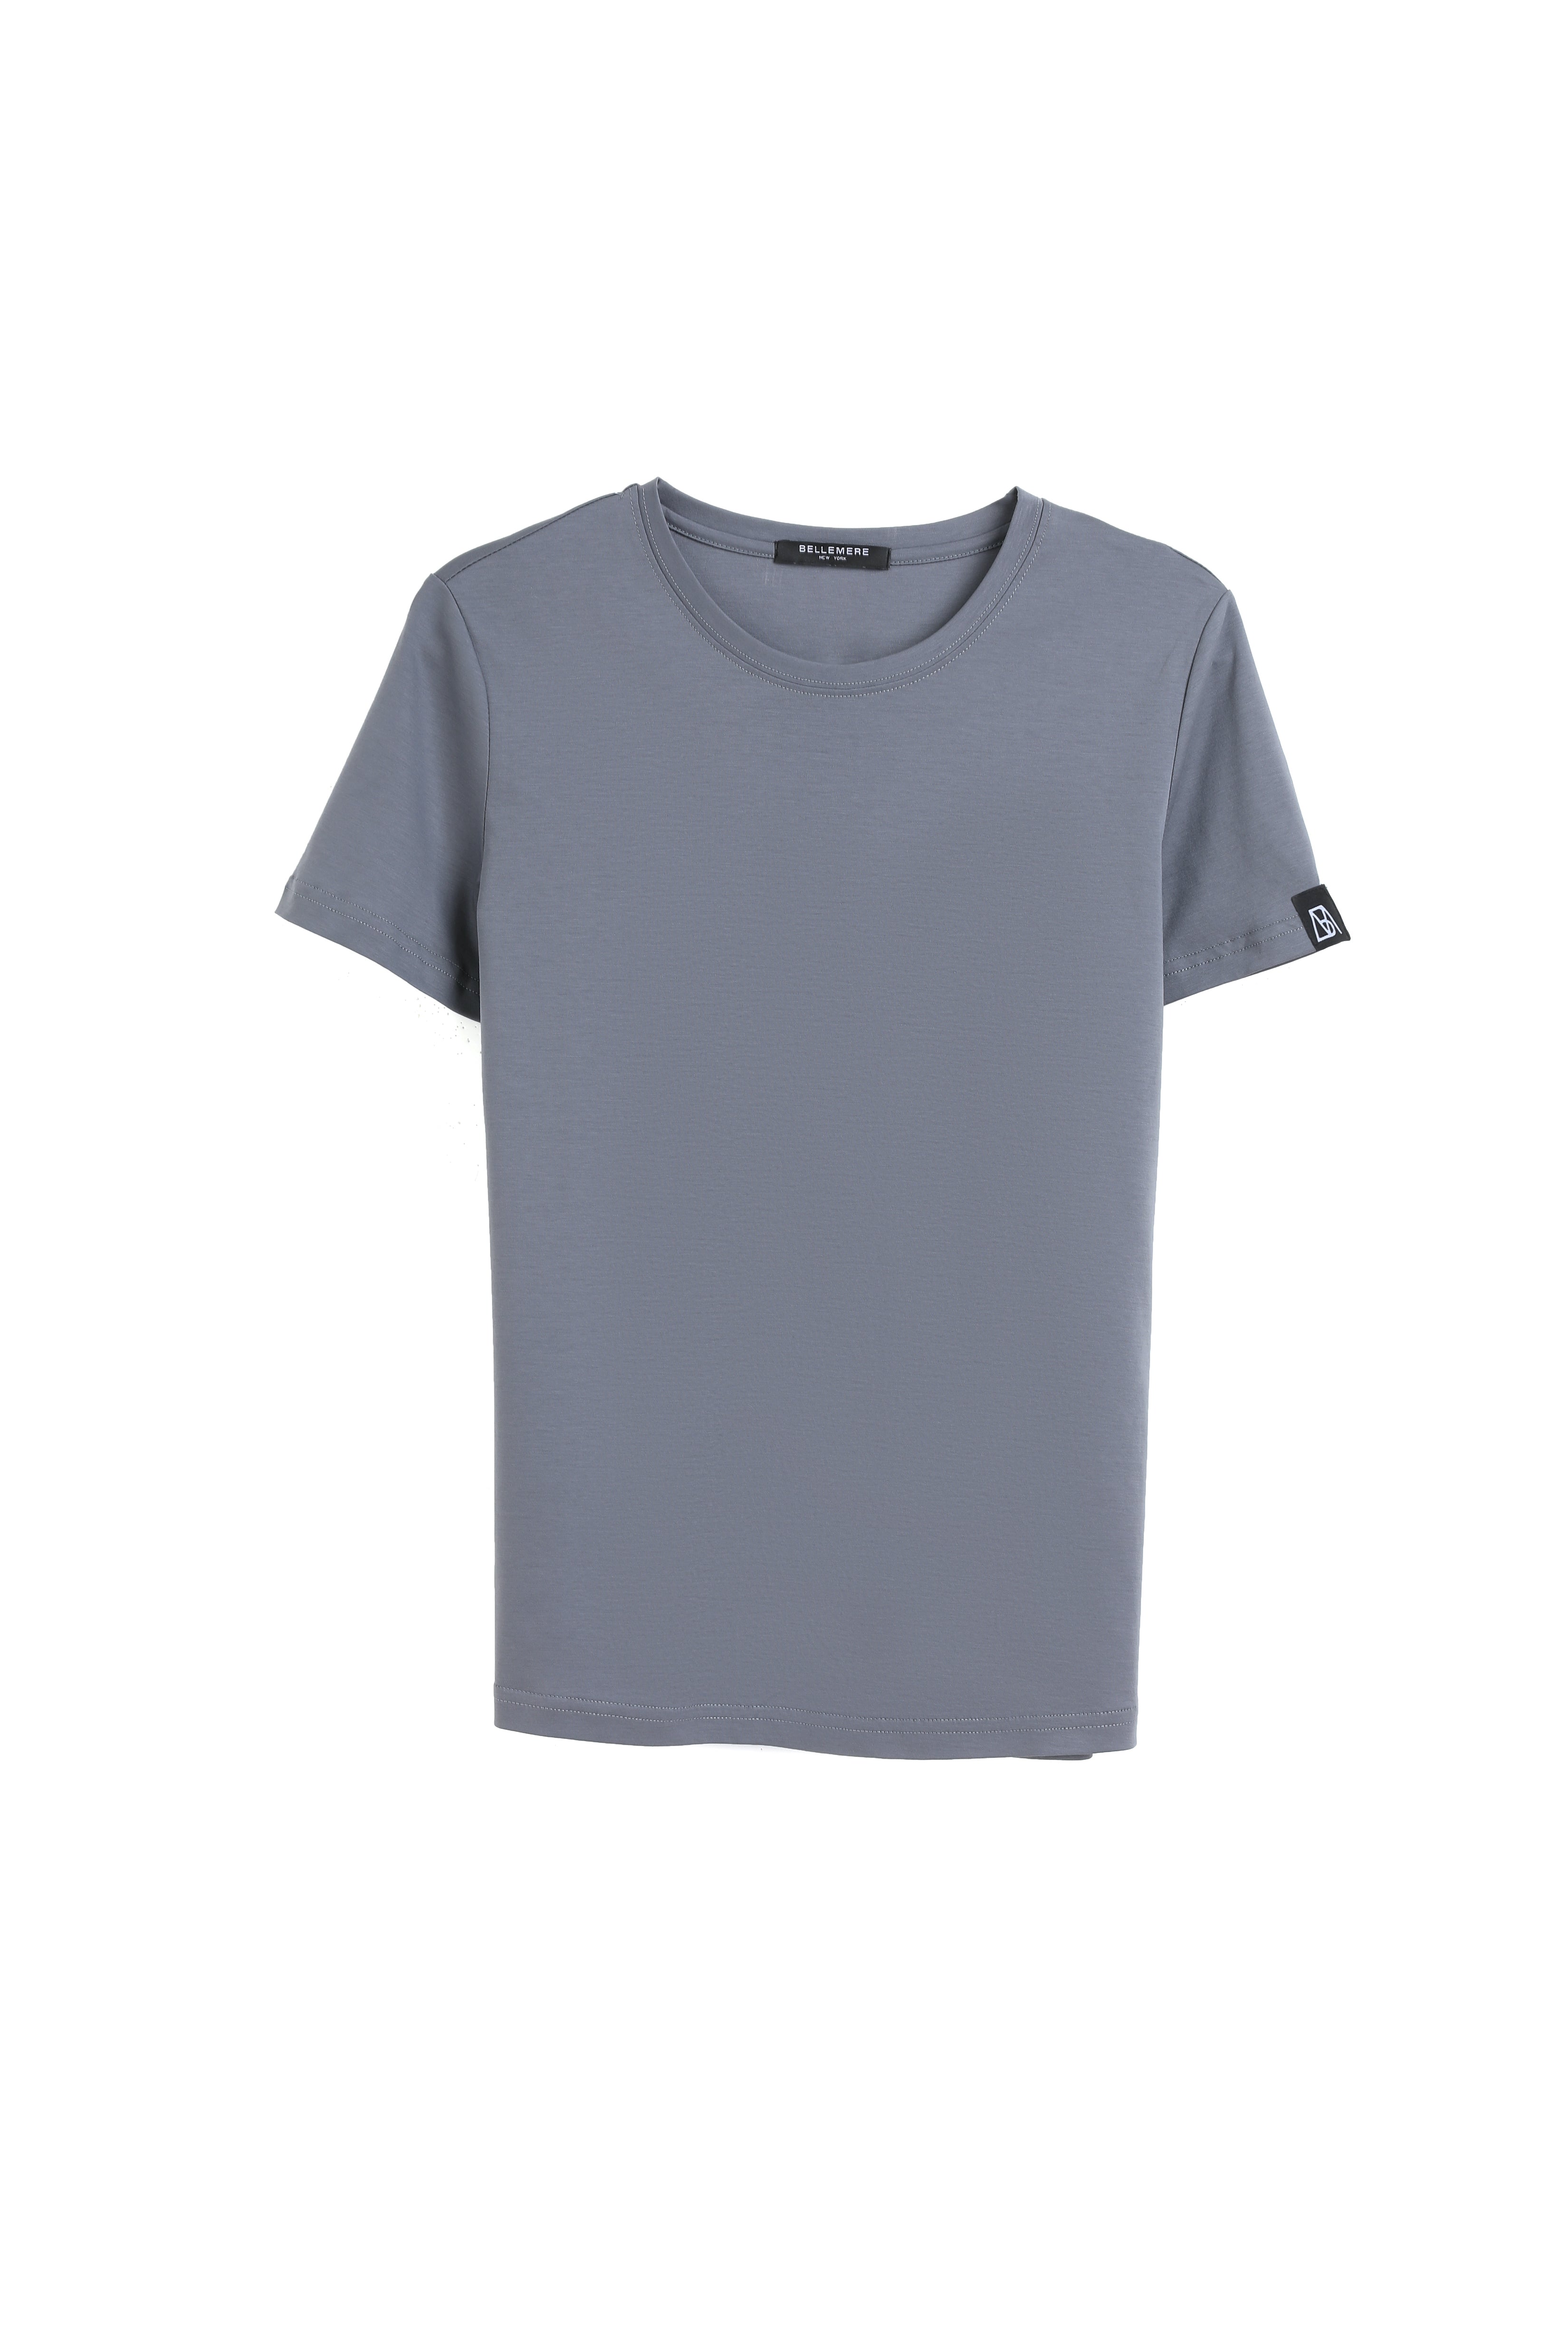 Grand Crew-Neck Cotton T-Shirt (160g)